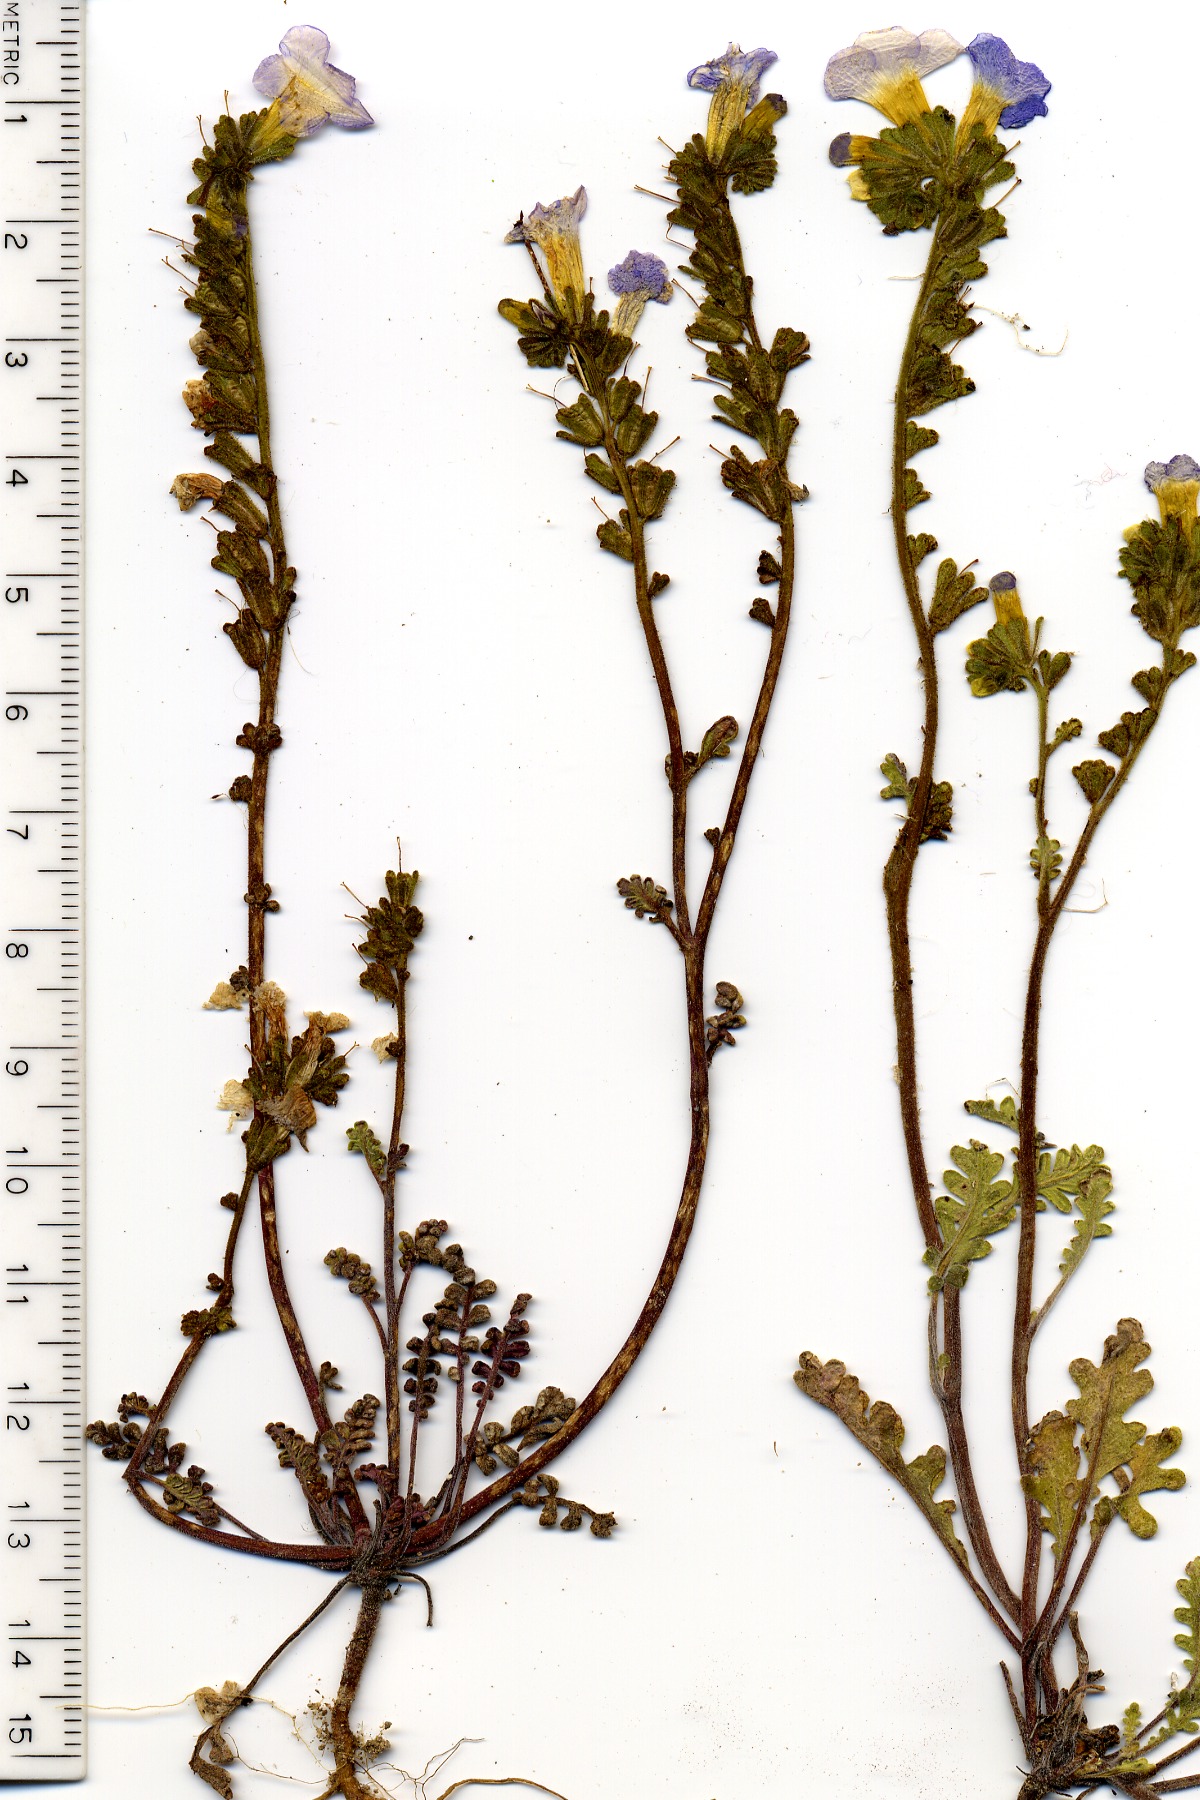 Phacelia fremontii, Boraginaceae, Mesquite Mountains, San Bernardino County, California